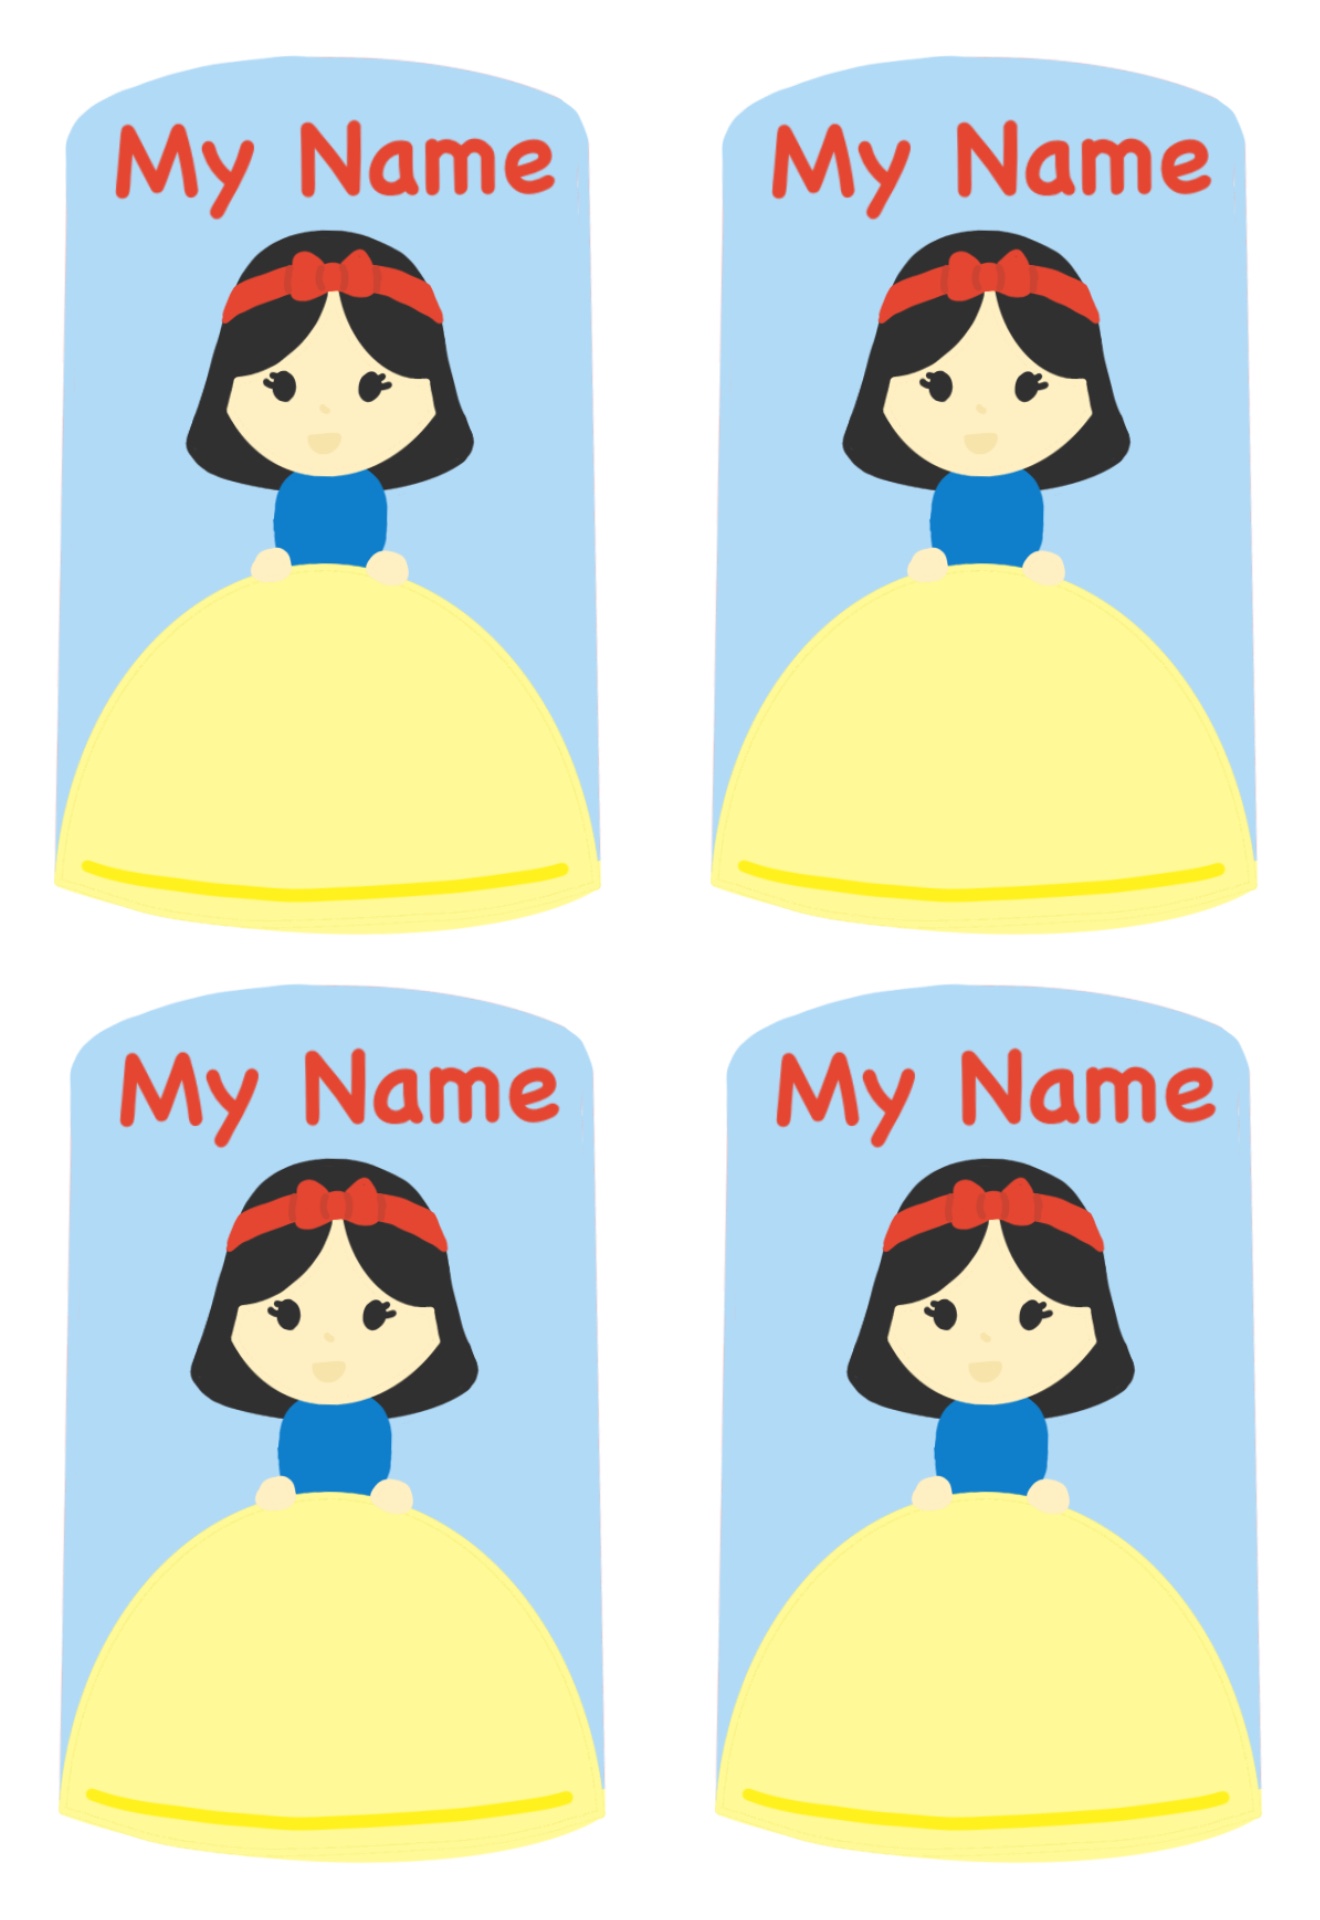 Notebook Disney Princess Name Tags Free Printable - Printable Templates